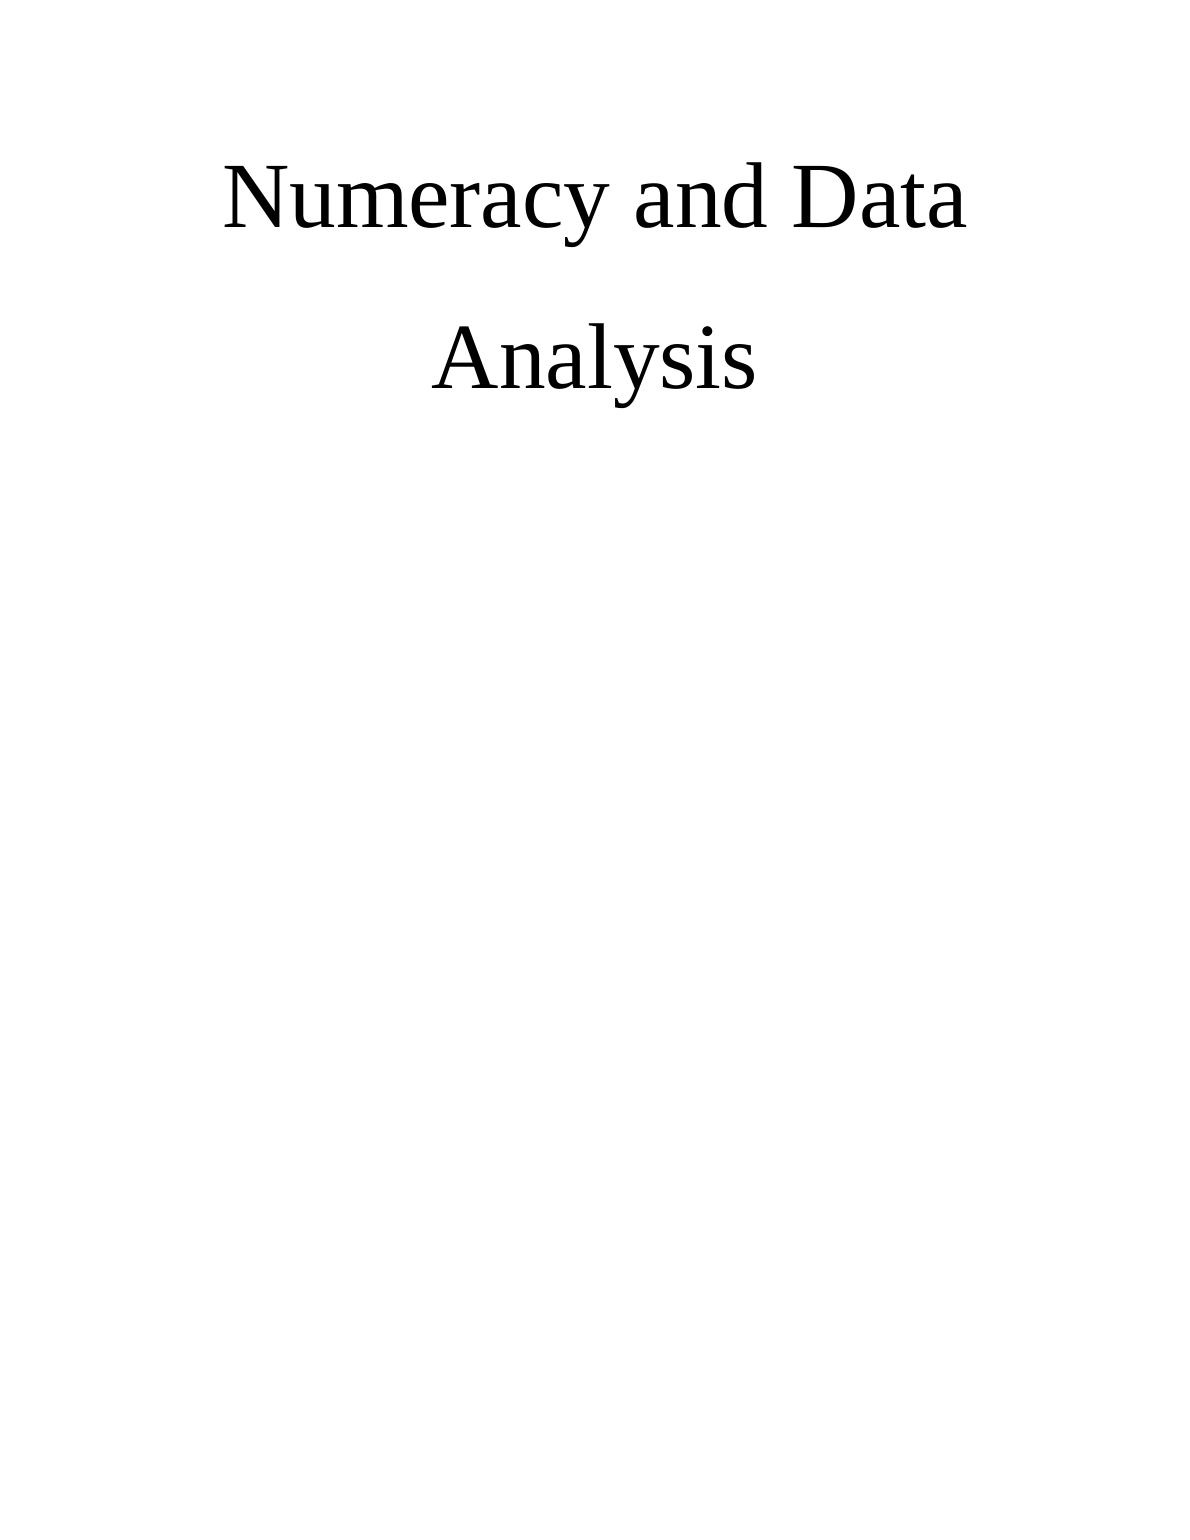 Numeracy and Data Analysis_1